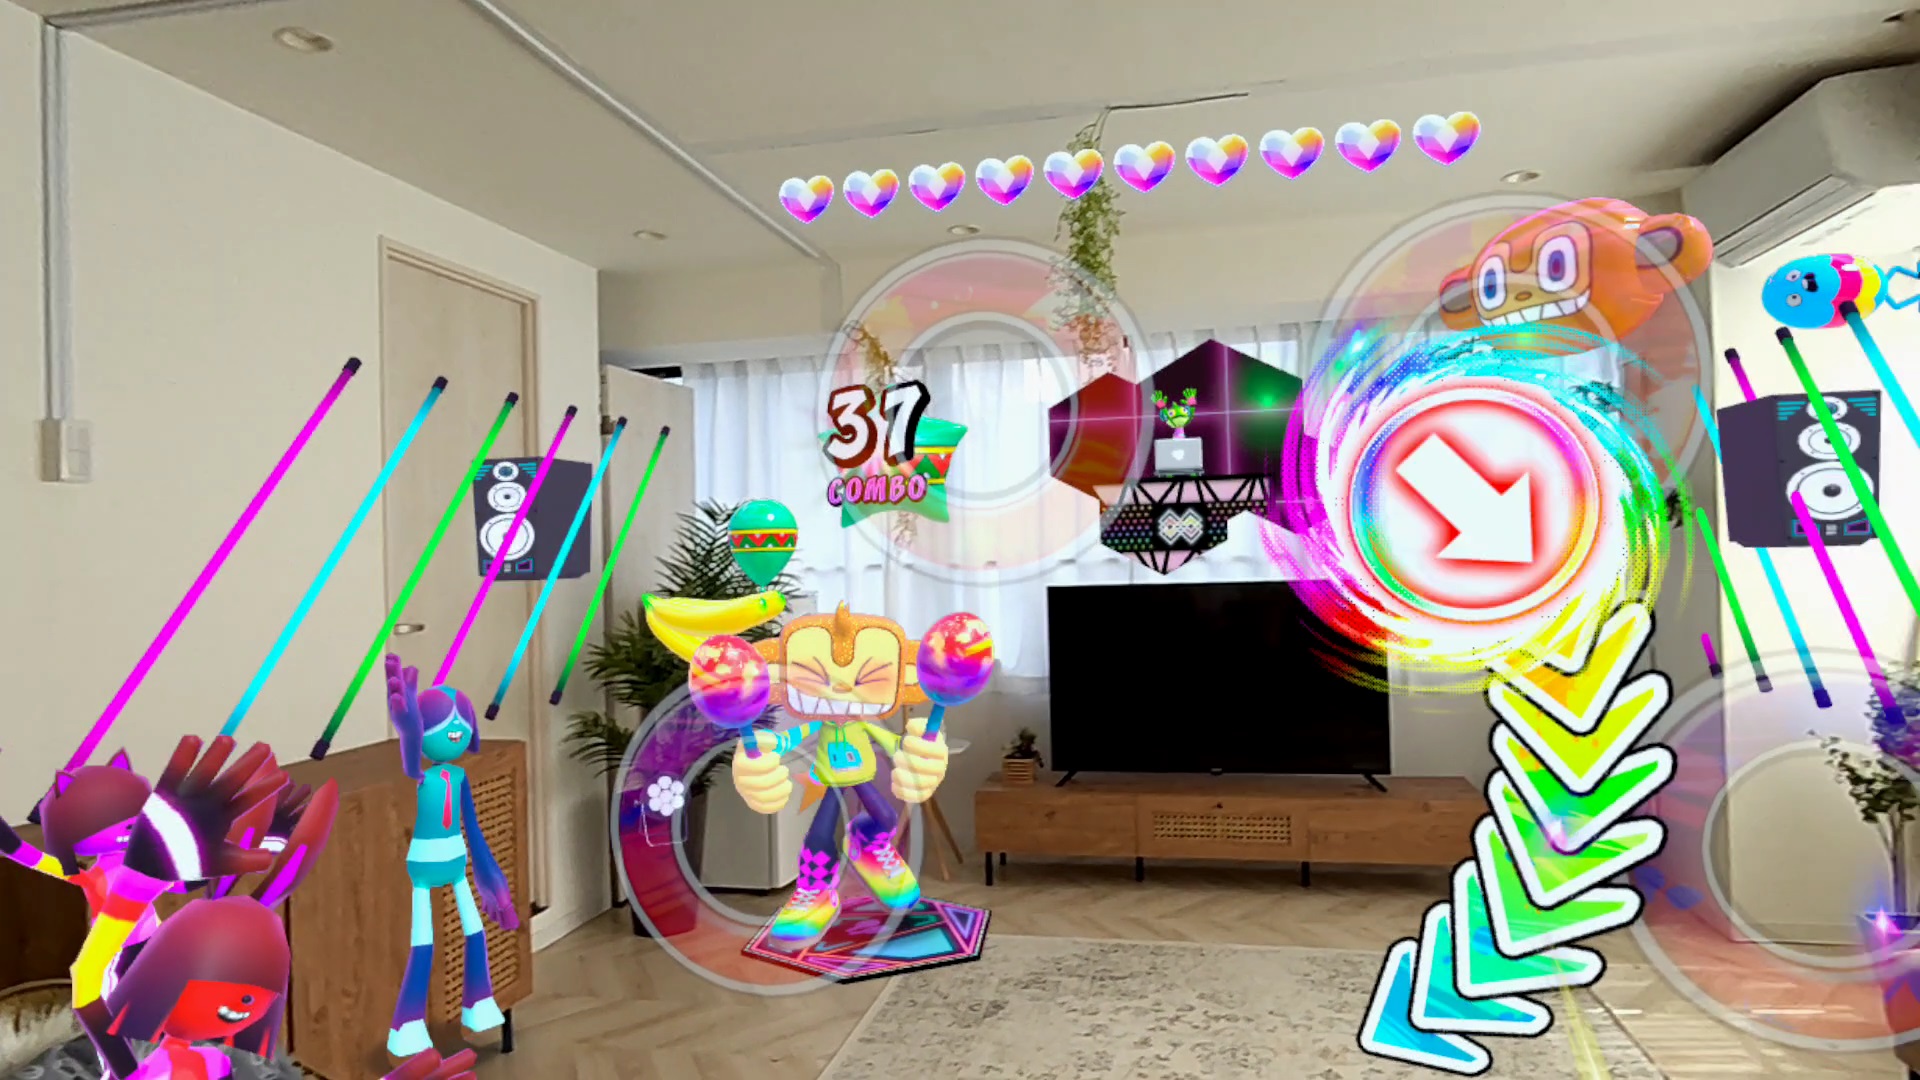 [تقرير التشغيل]The mode compatible with “Samba DE Amigo: Virtual Party” MR (Mixed Reality) turns the room into a different world.  Initial demo of Meta Quest 3